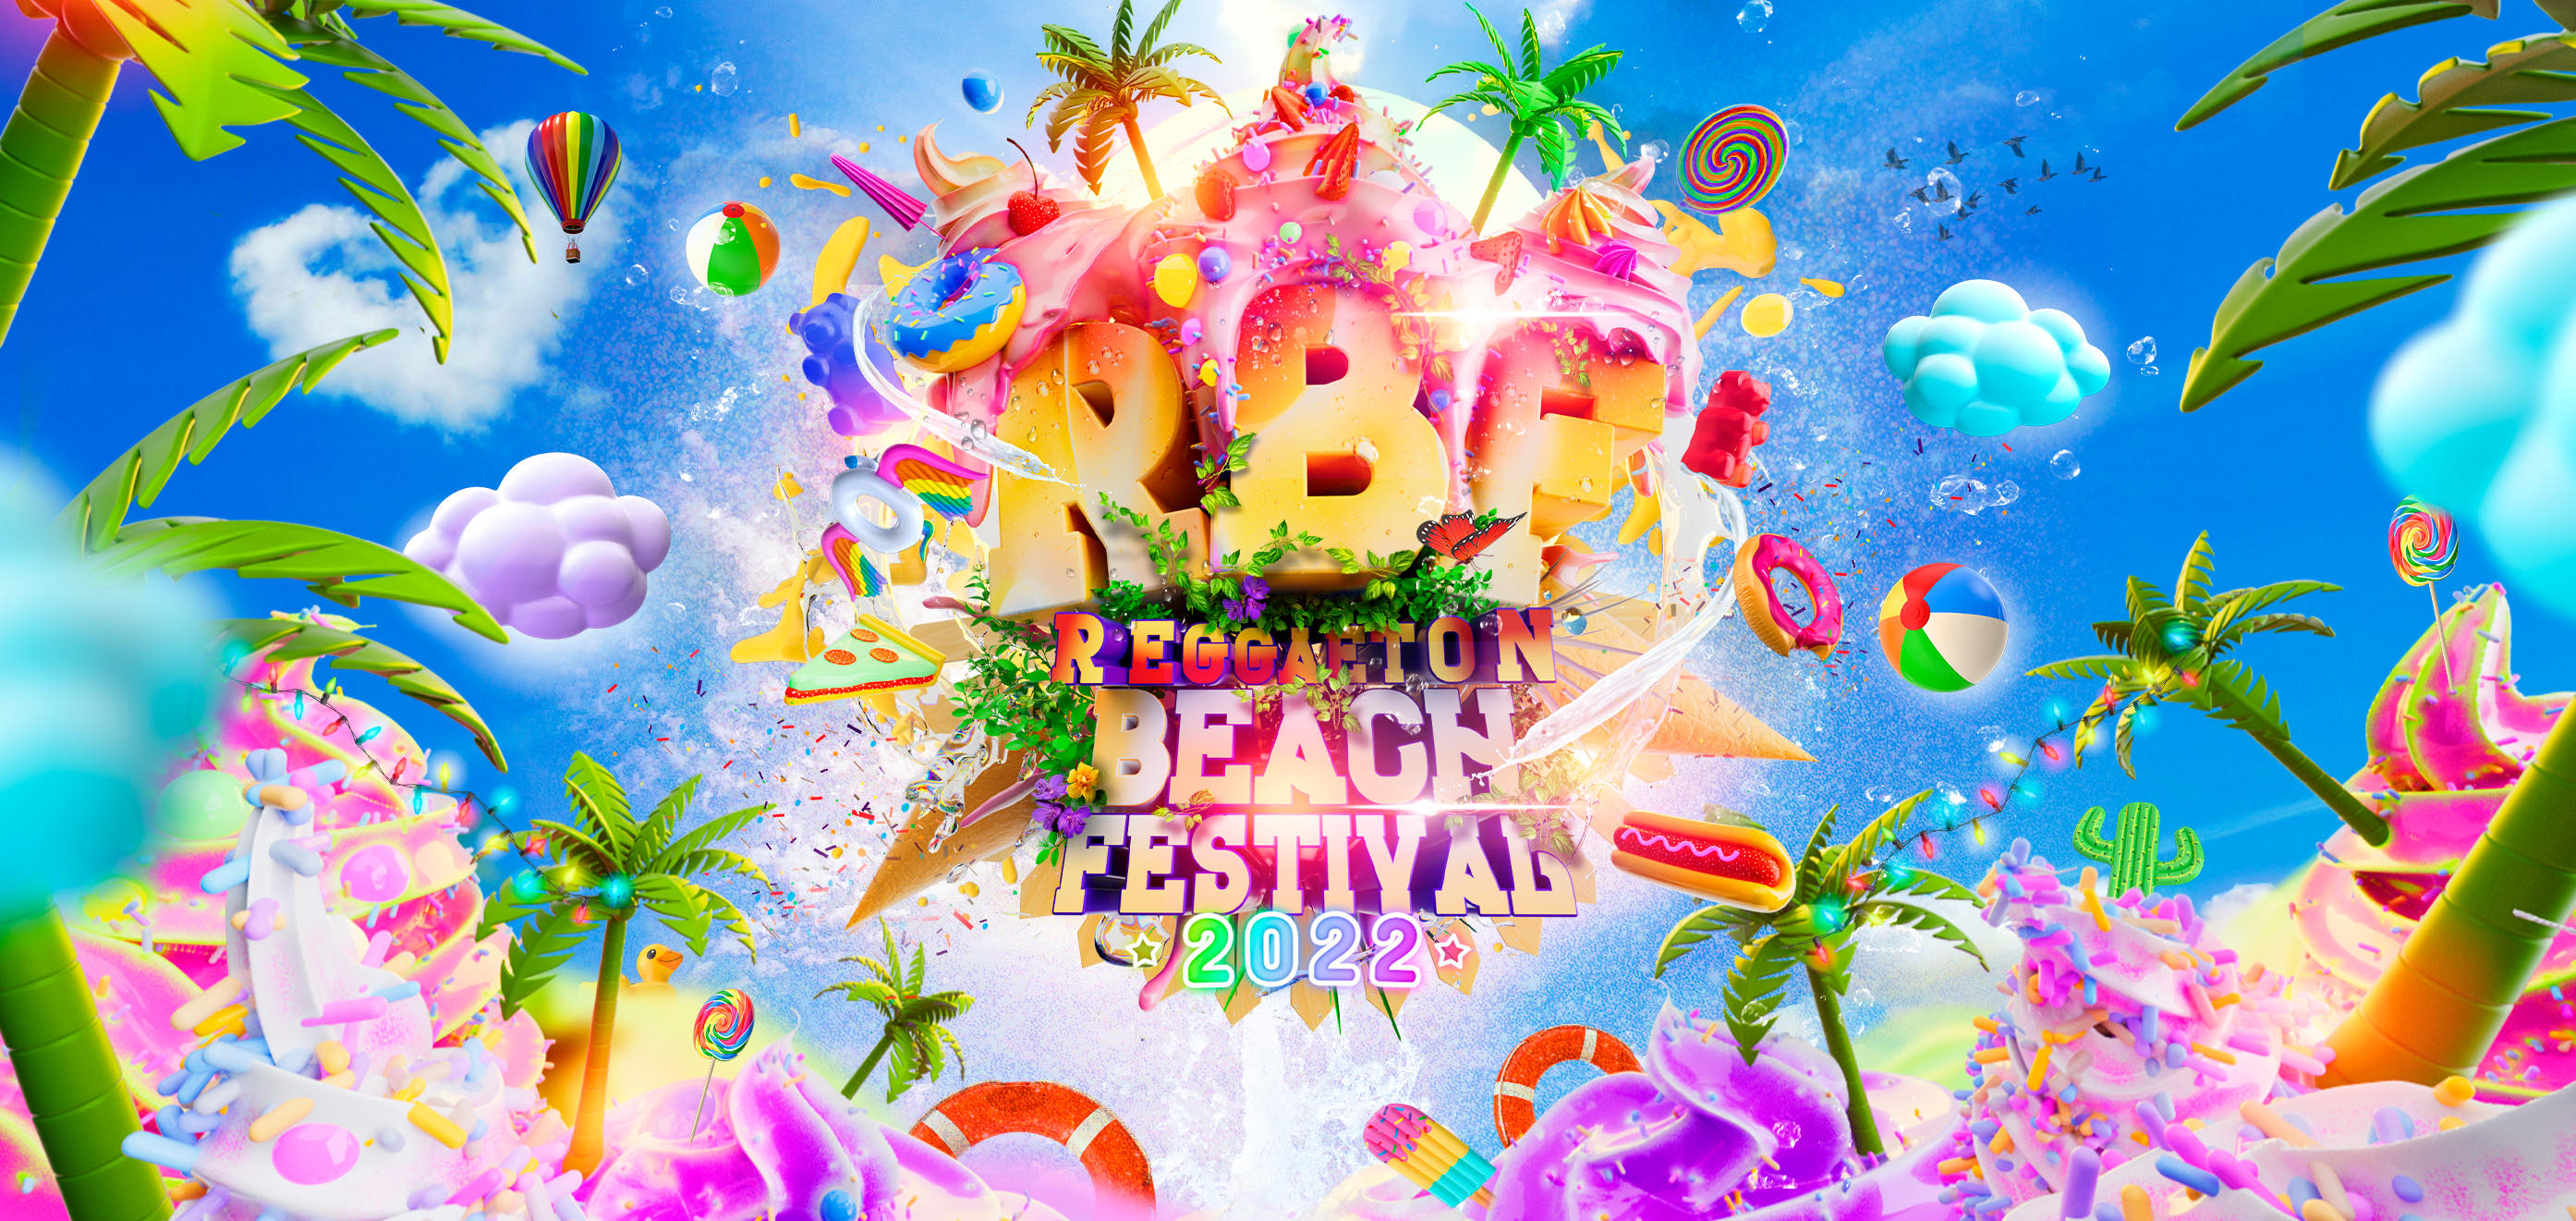 reggaeton_beach_festival_2022_|_madrid